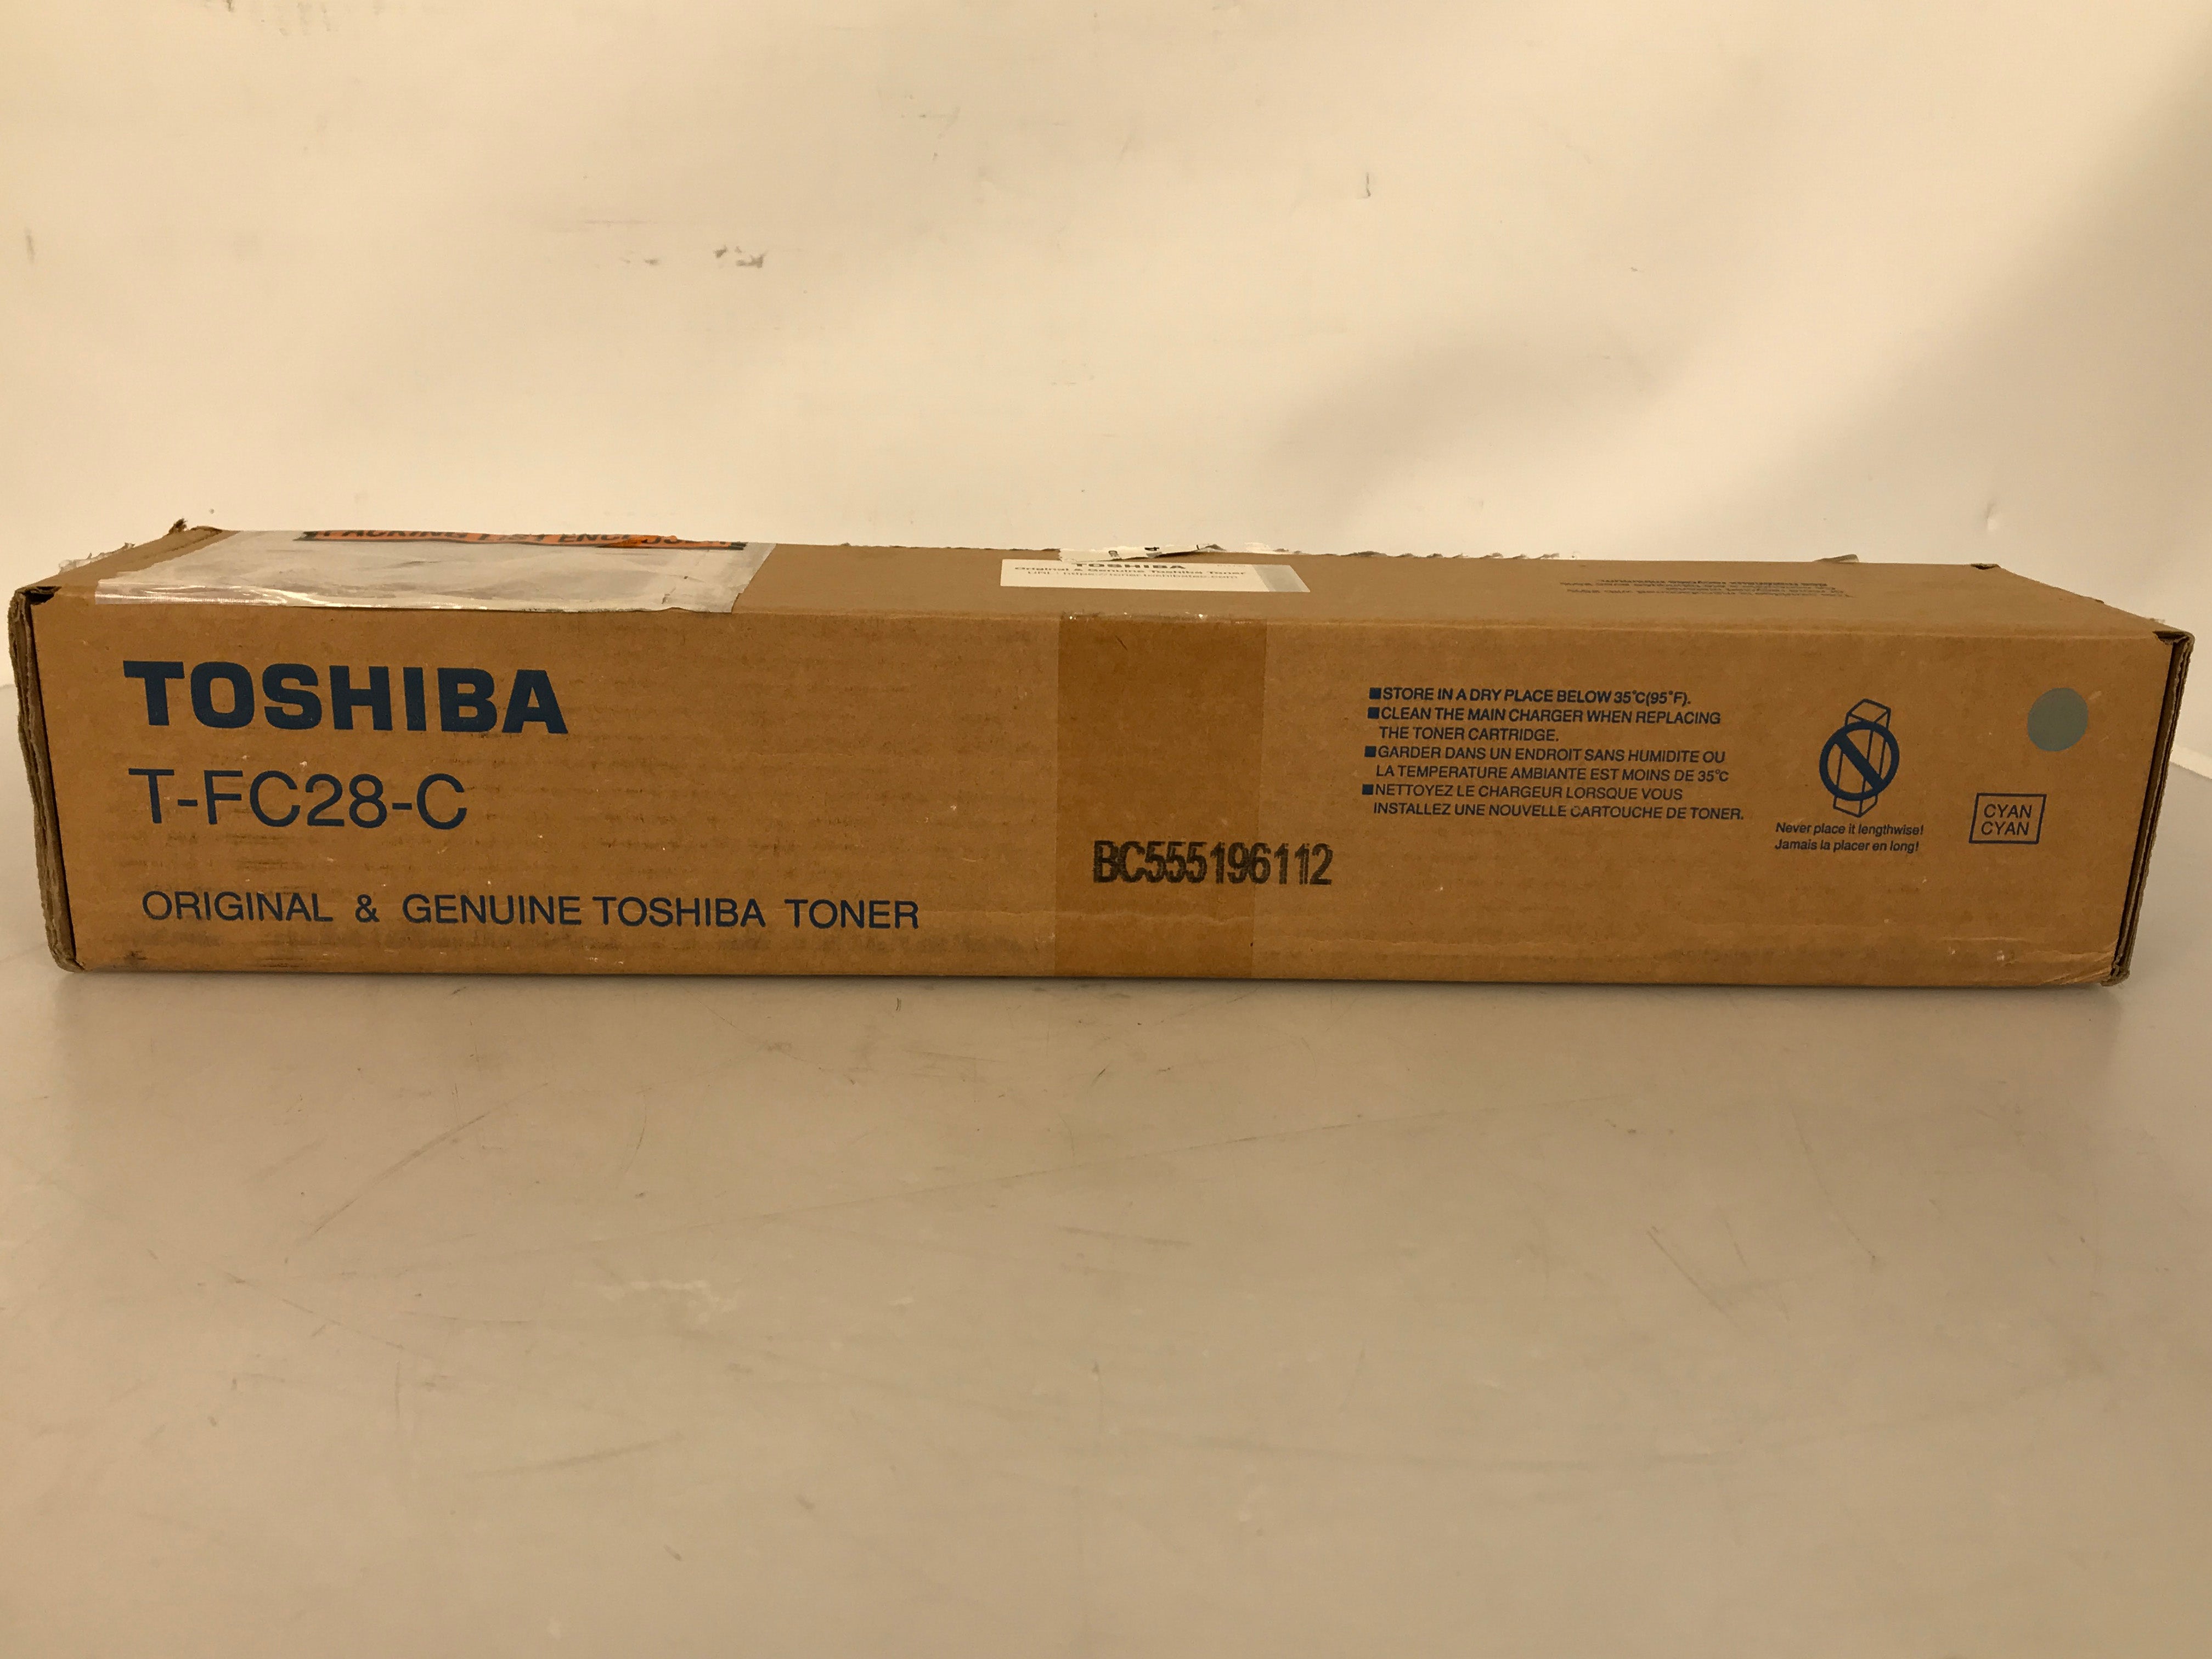 Toshiba T-FC28-C Cyan Toner Cartridge